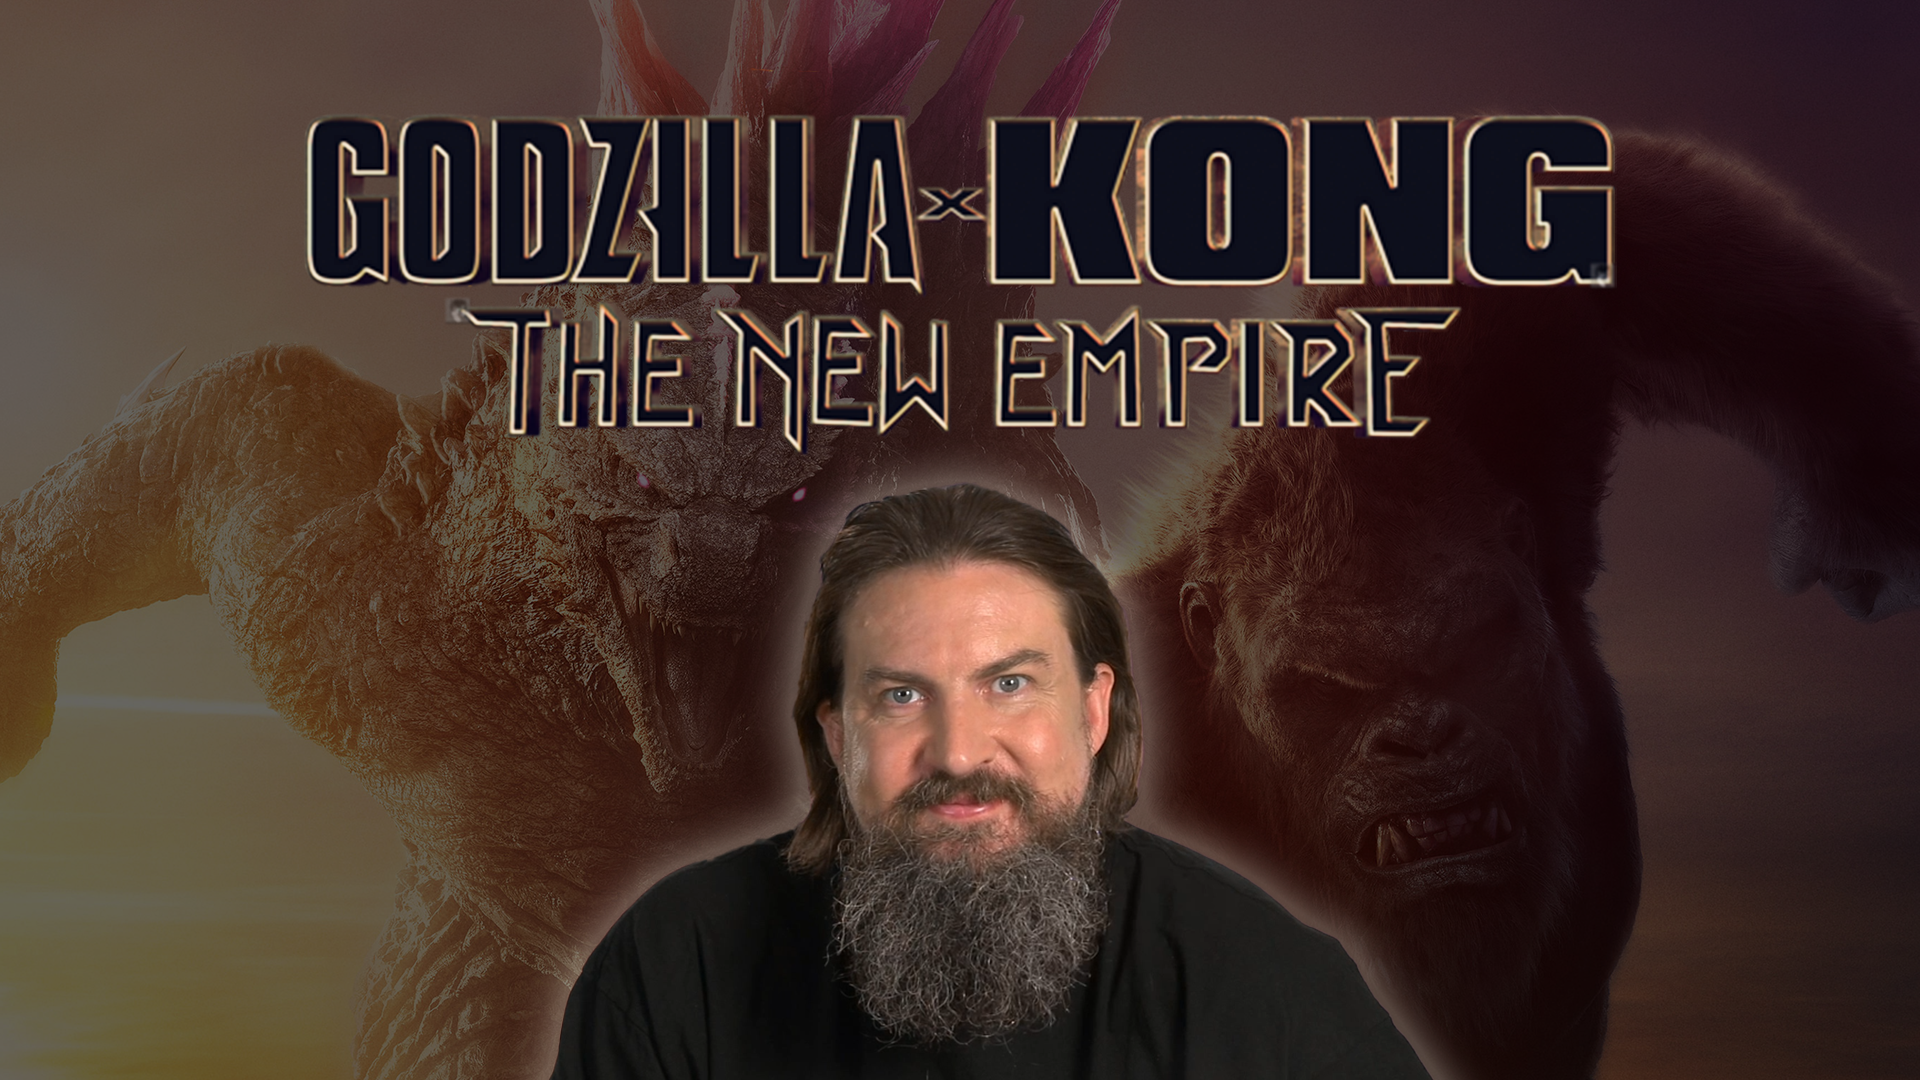 Adam Wingard, director of Godzilla X Kong: The New Empire